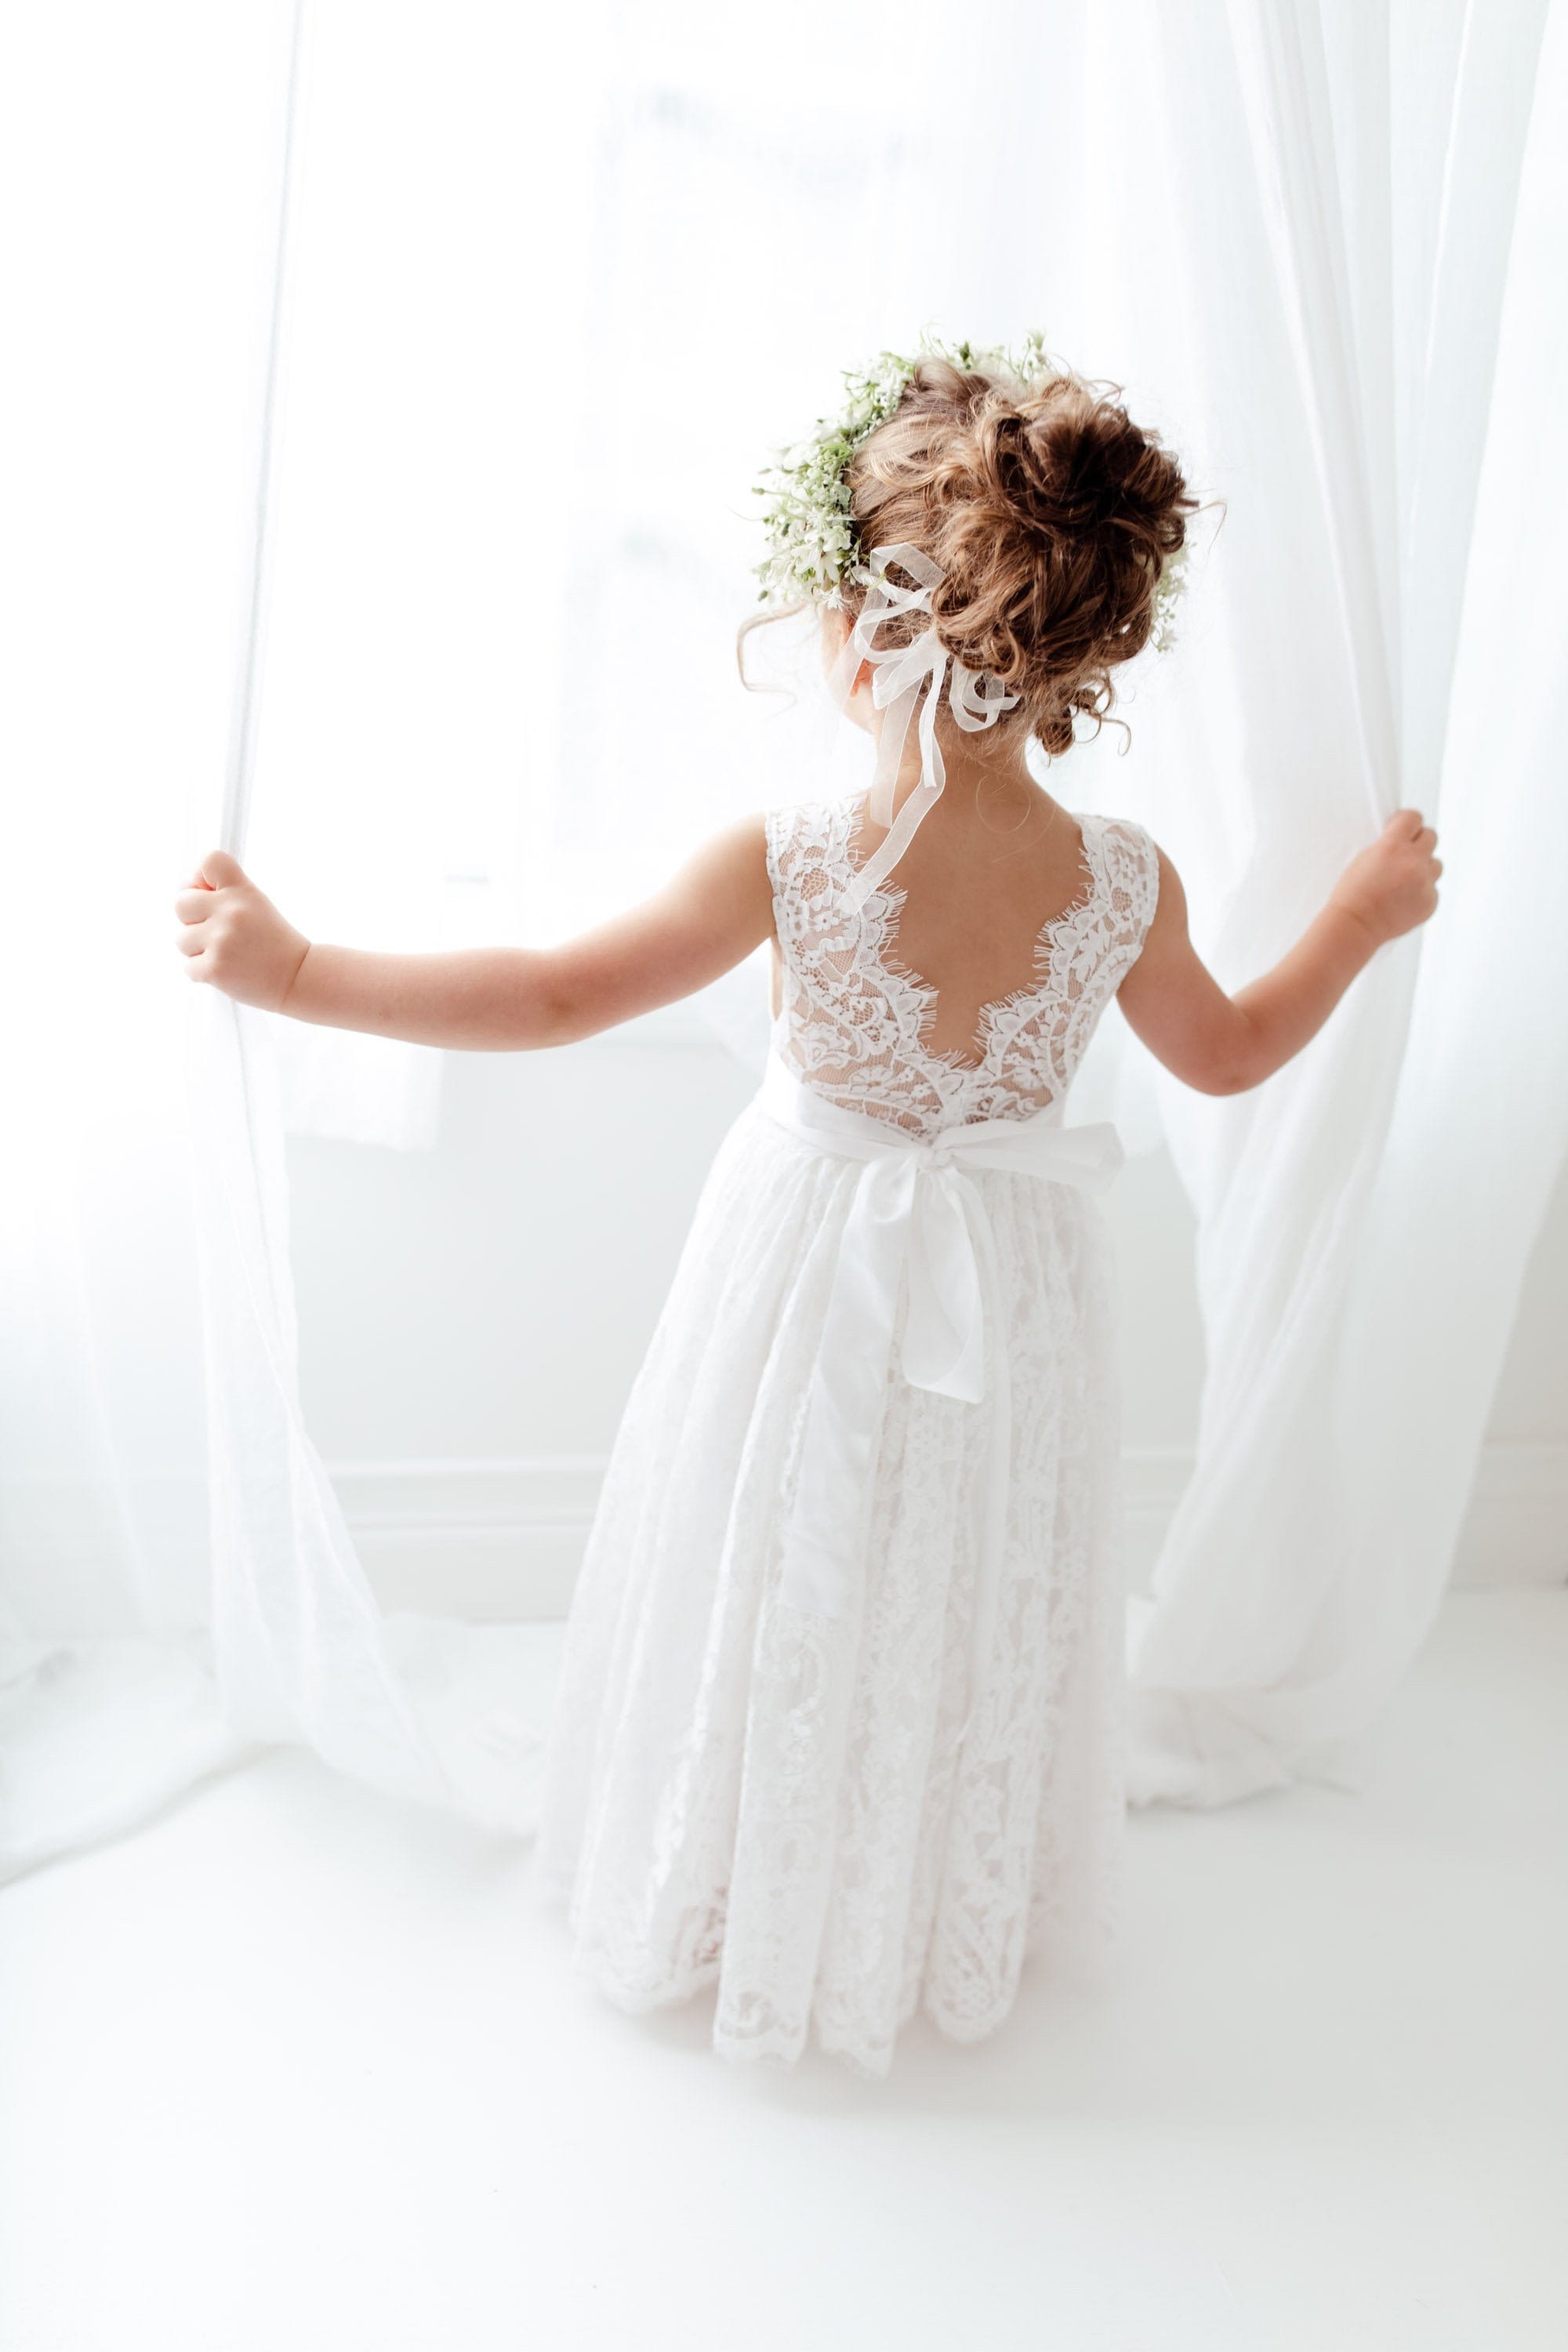 WaterDress Women's Boho Lace Wedding Dresses for Bride 2020 Long